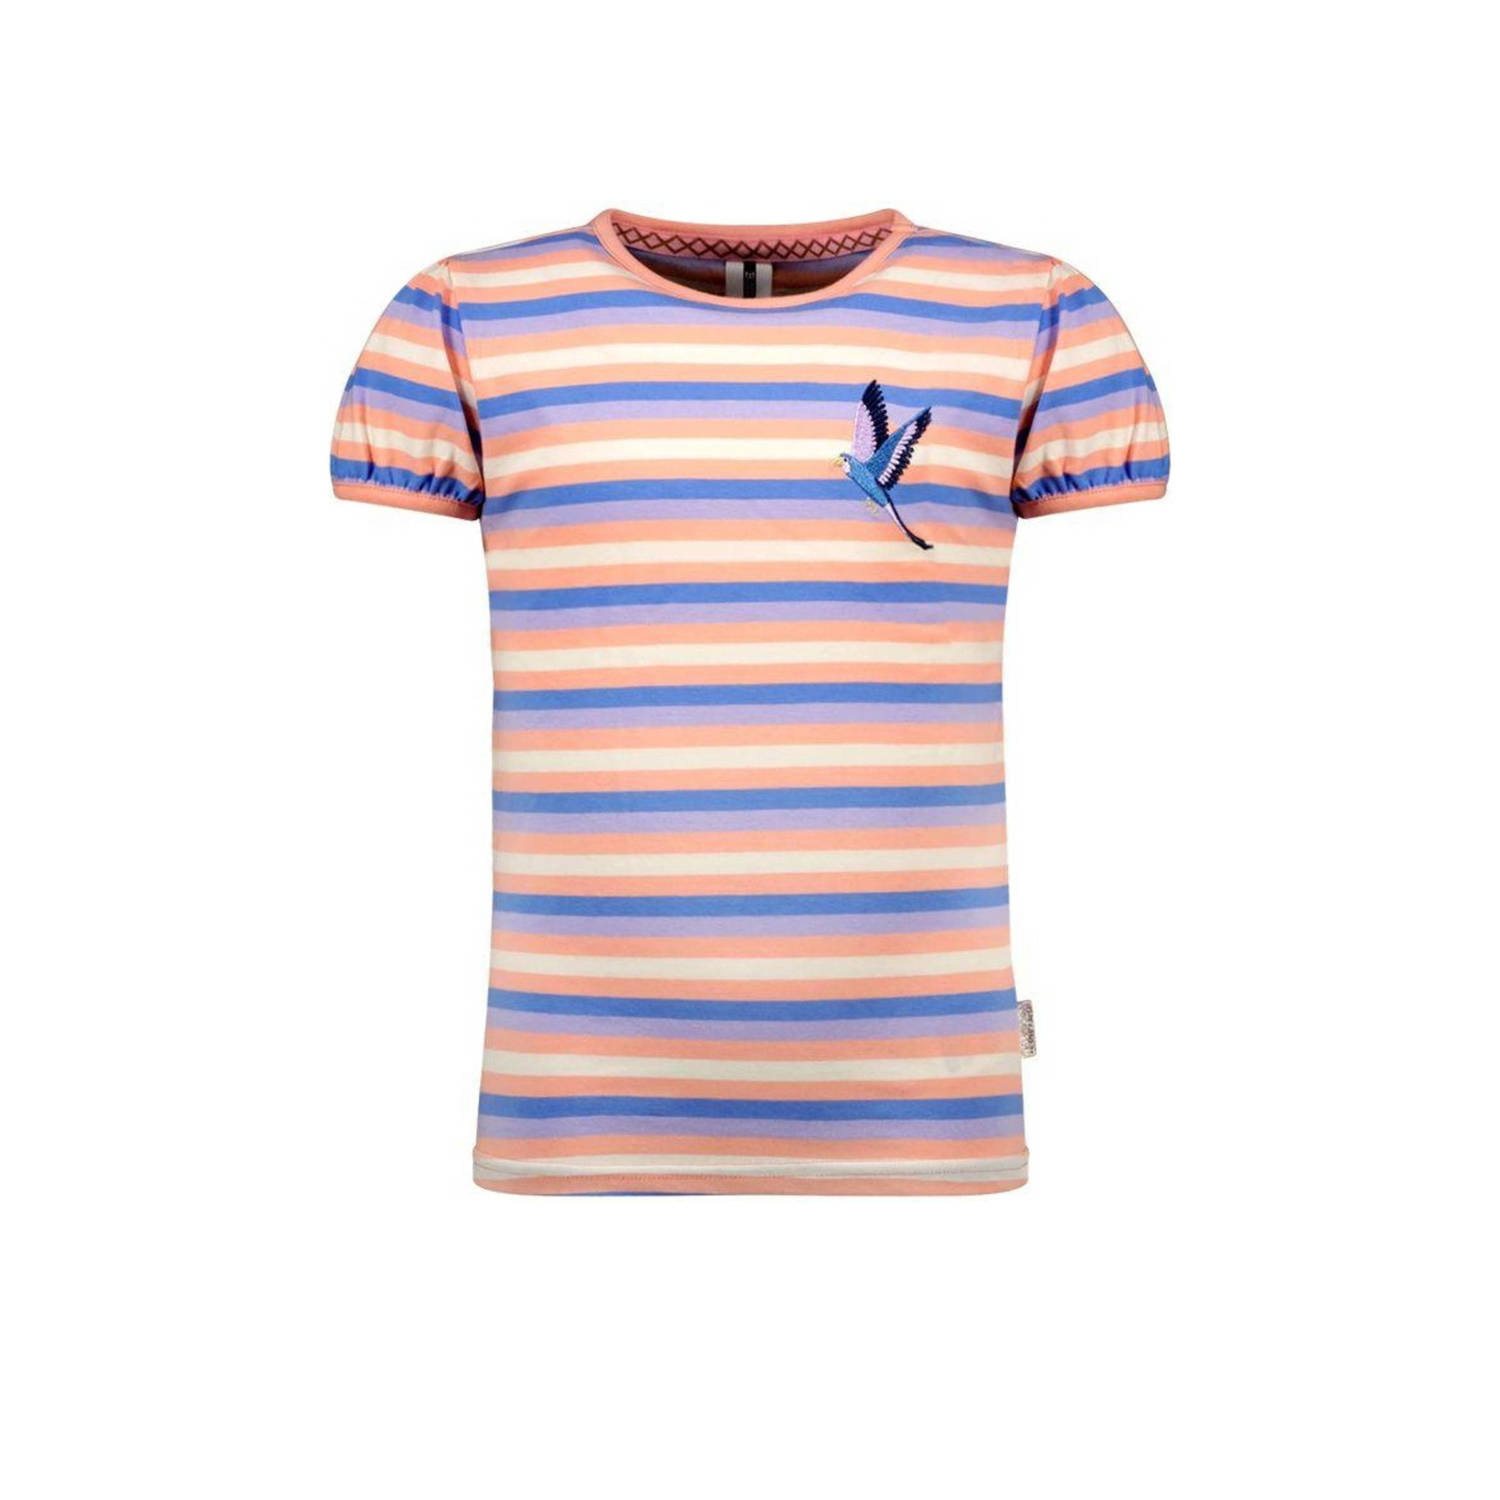 B.Nosy gestreept T-shirt Phebe roze blauw wit Meisjes Stretchkatoen Ronde hals 122 128